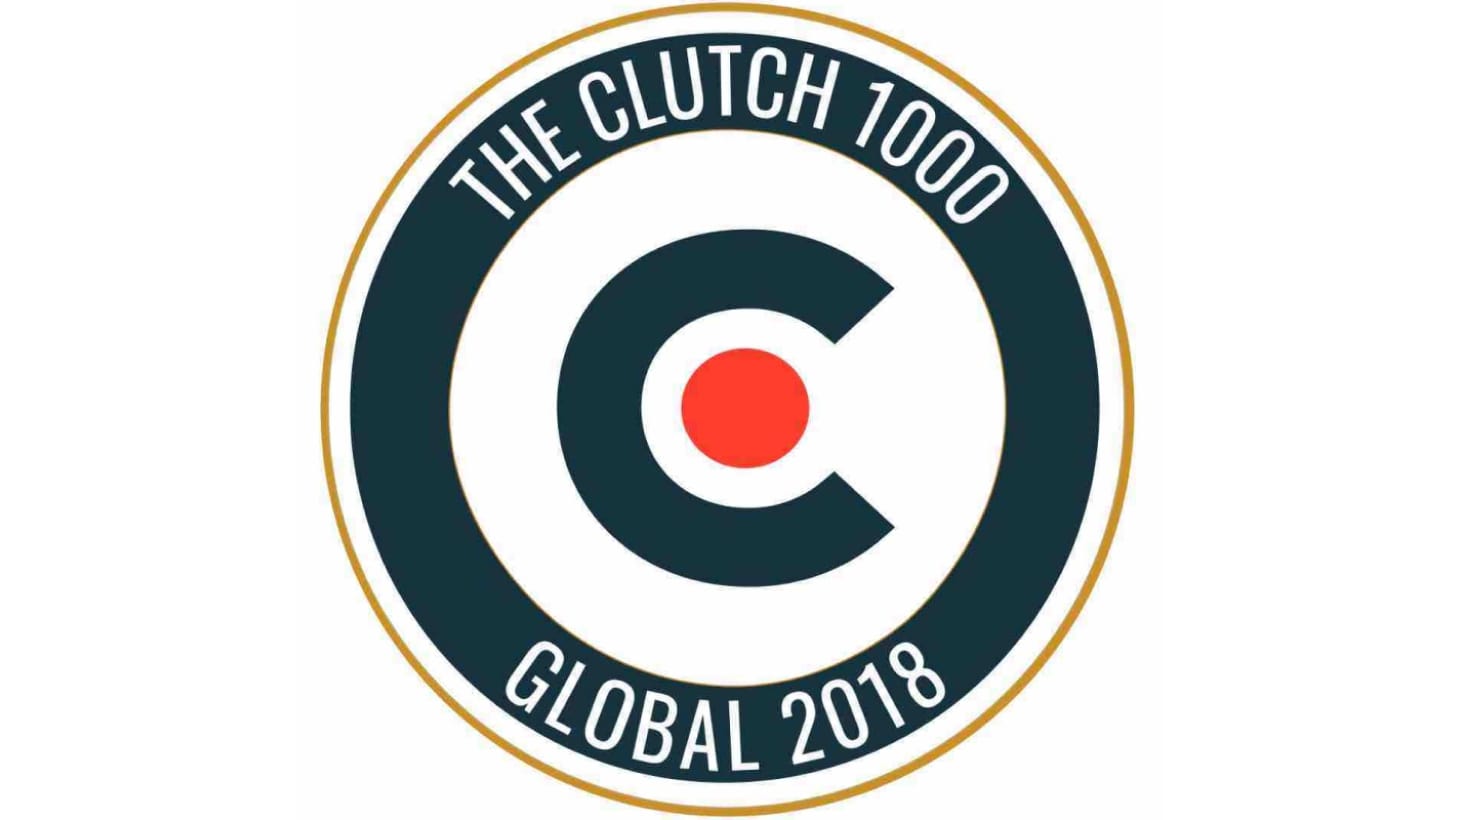 Clutch_logo-730-410